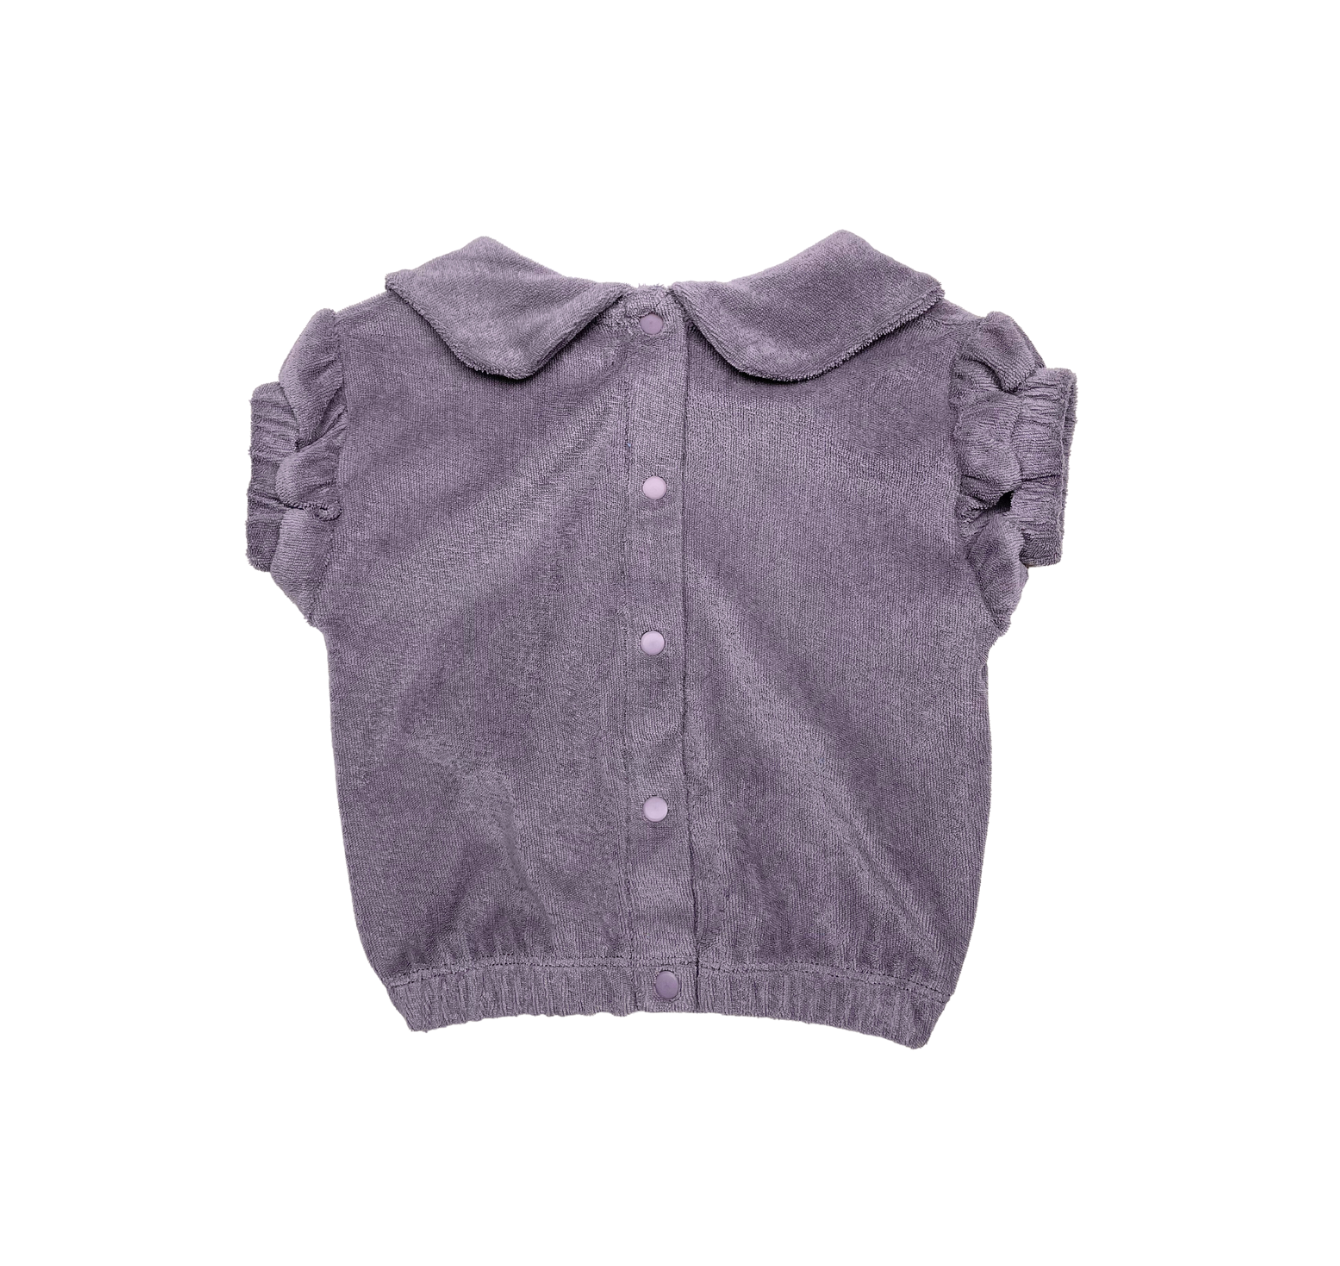 WE ARE KIDS - T-shirt violet effet éponge - 6/12 mois